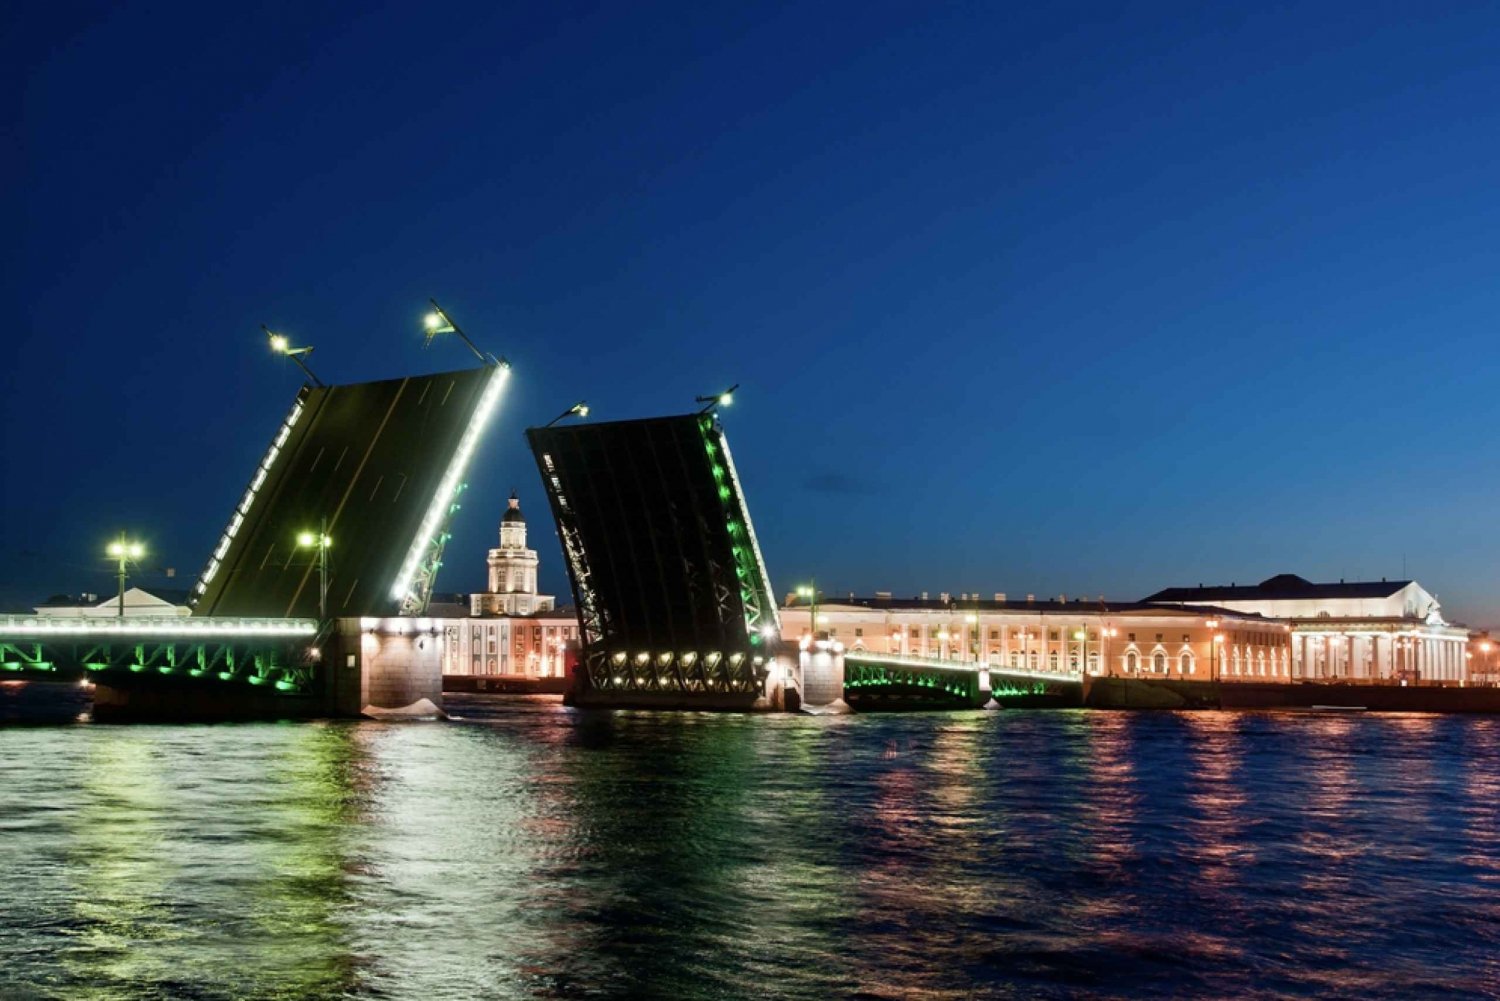 St. Petersburg: Illuminations Night City Tour